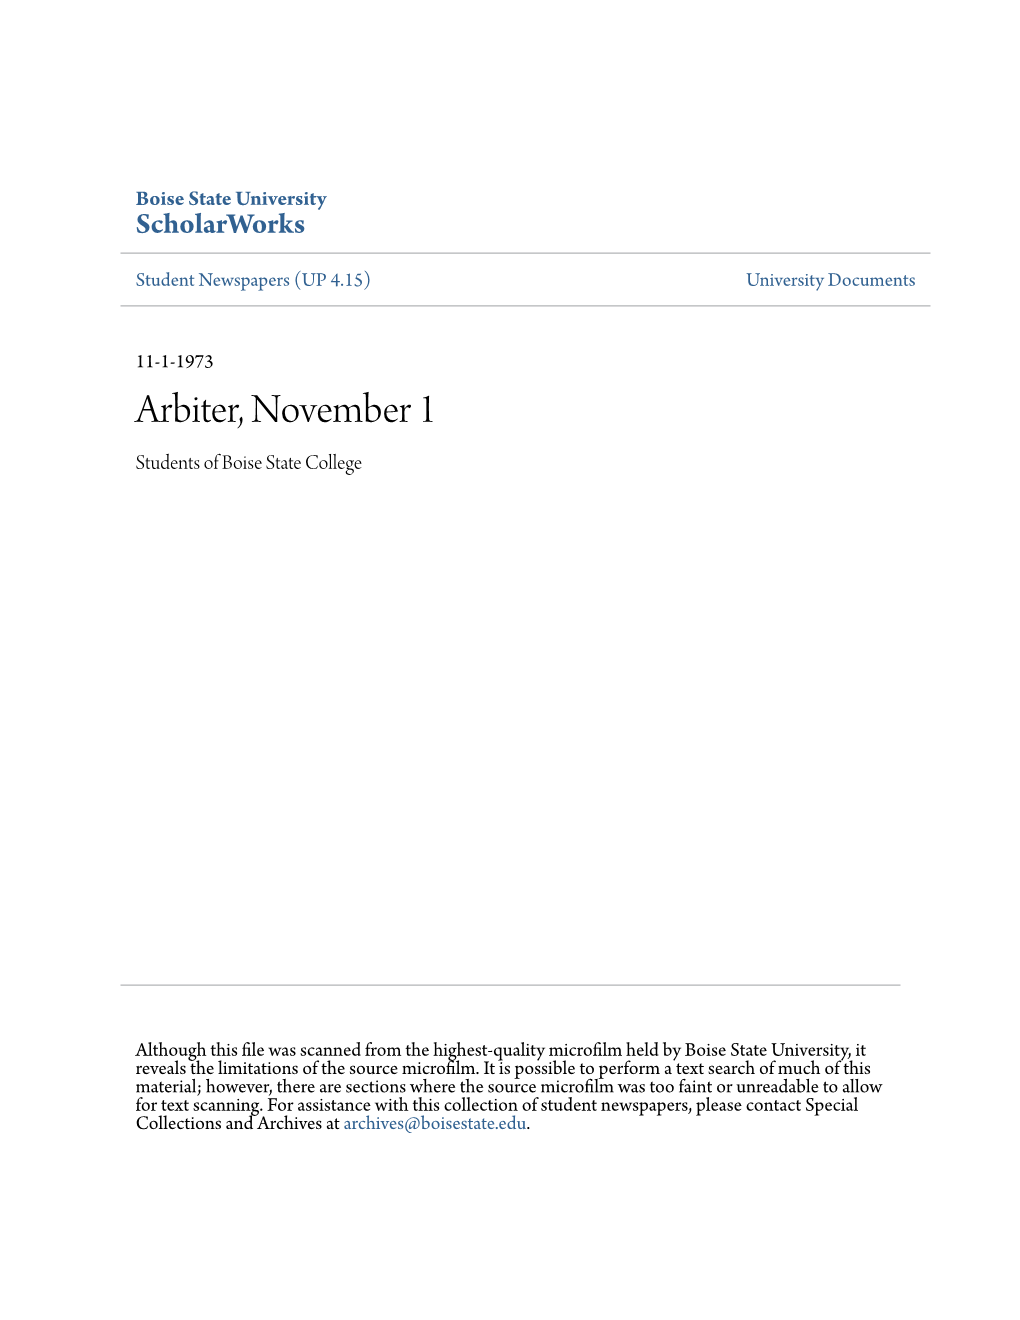 Arbiter, November 1 Students of Boise State College